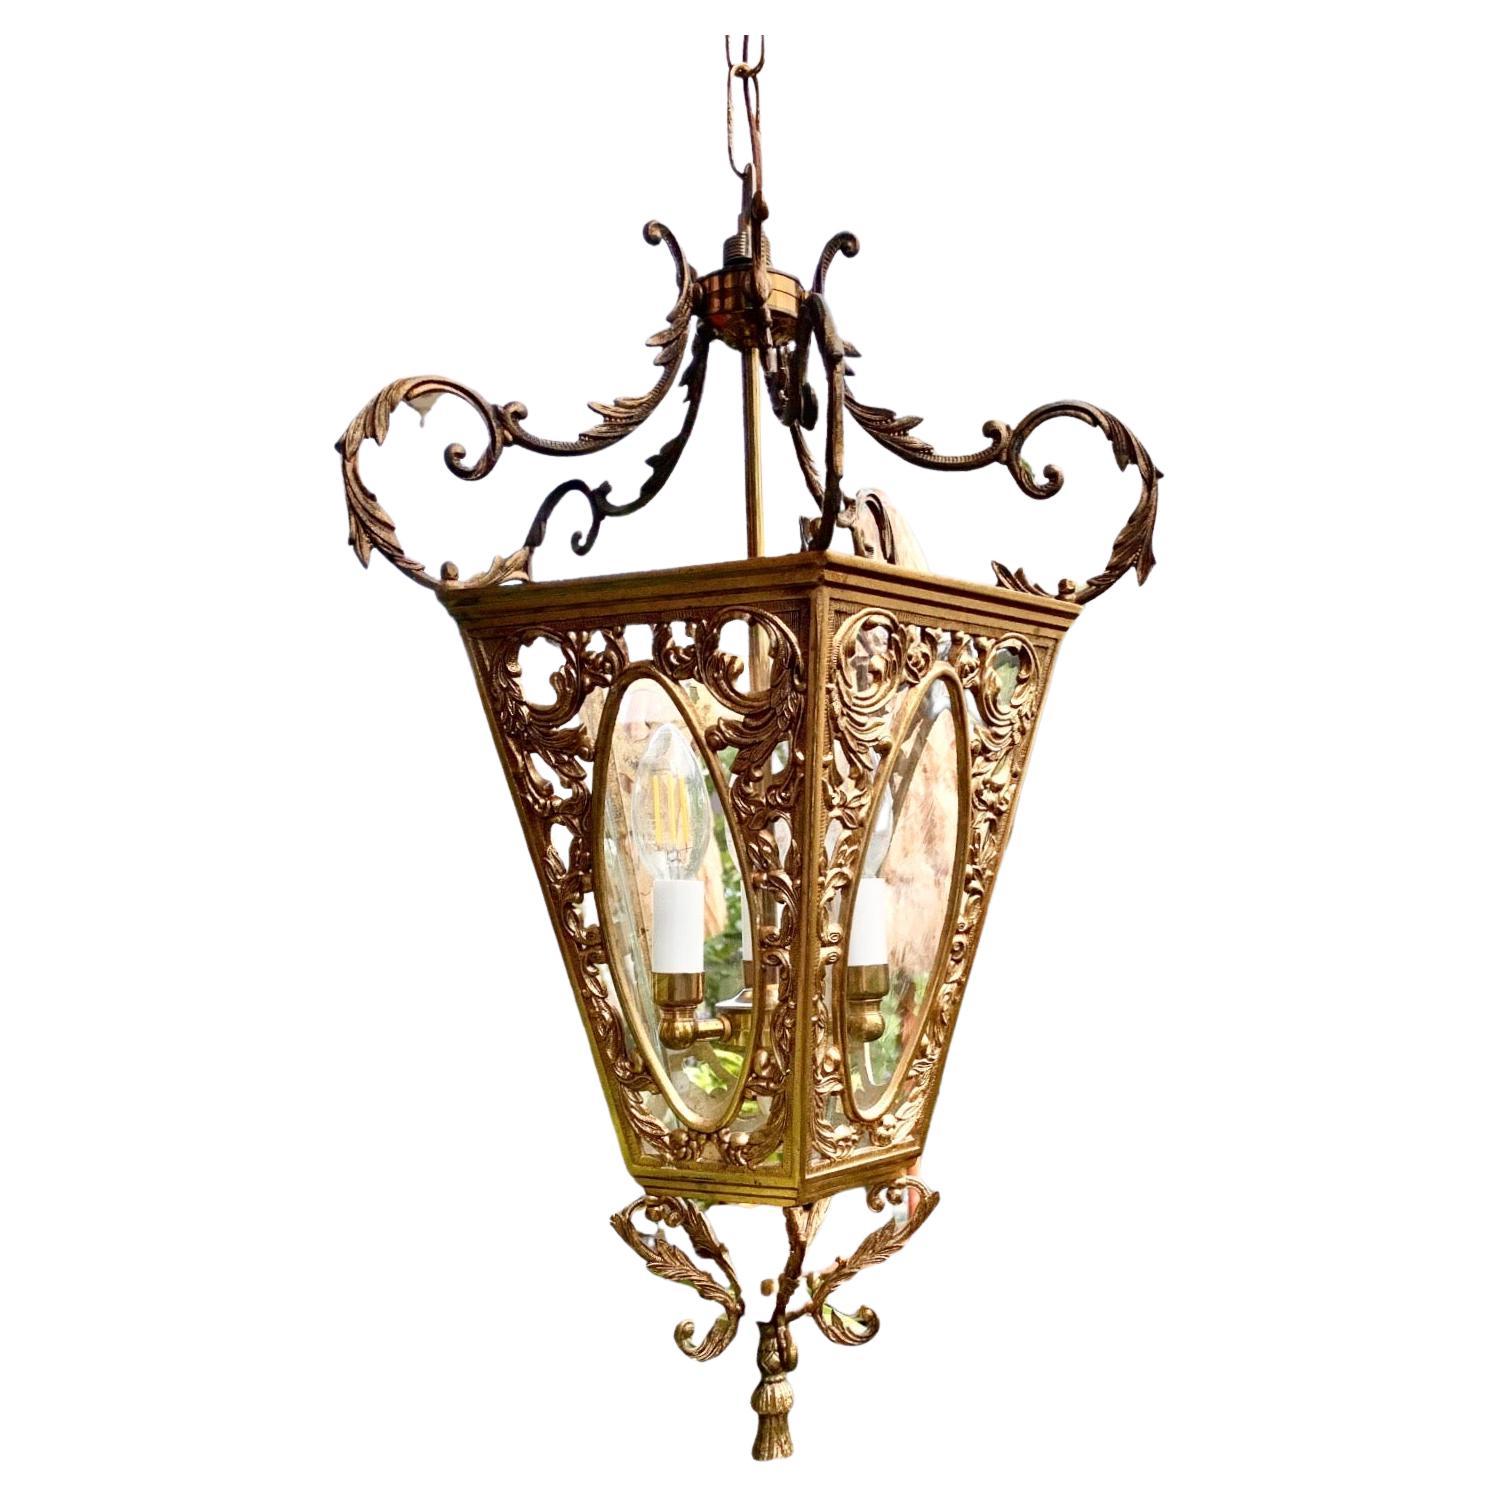 Antique Early 20th C. Gilt Brass & Glass Pentagonal Hall Lantern